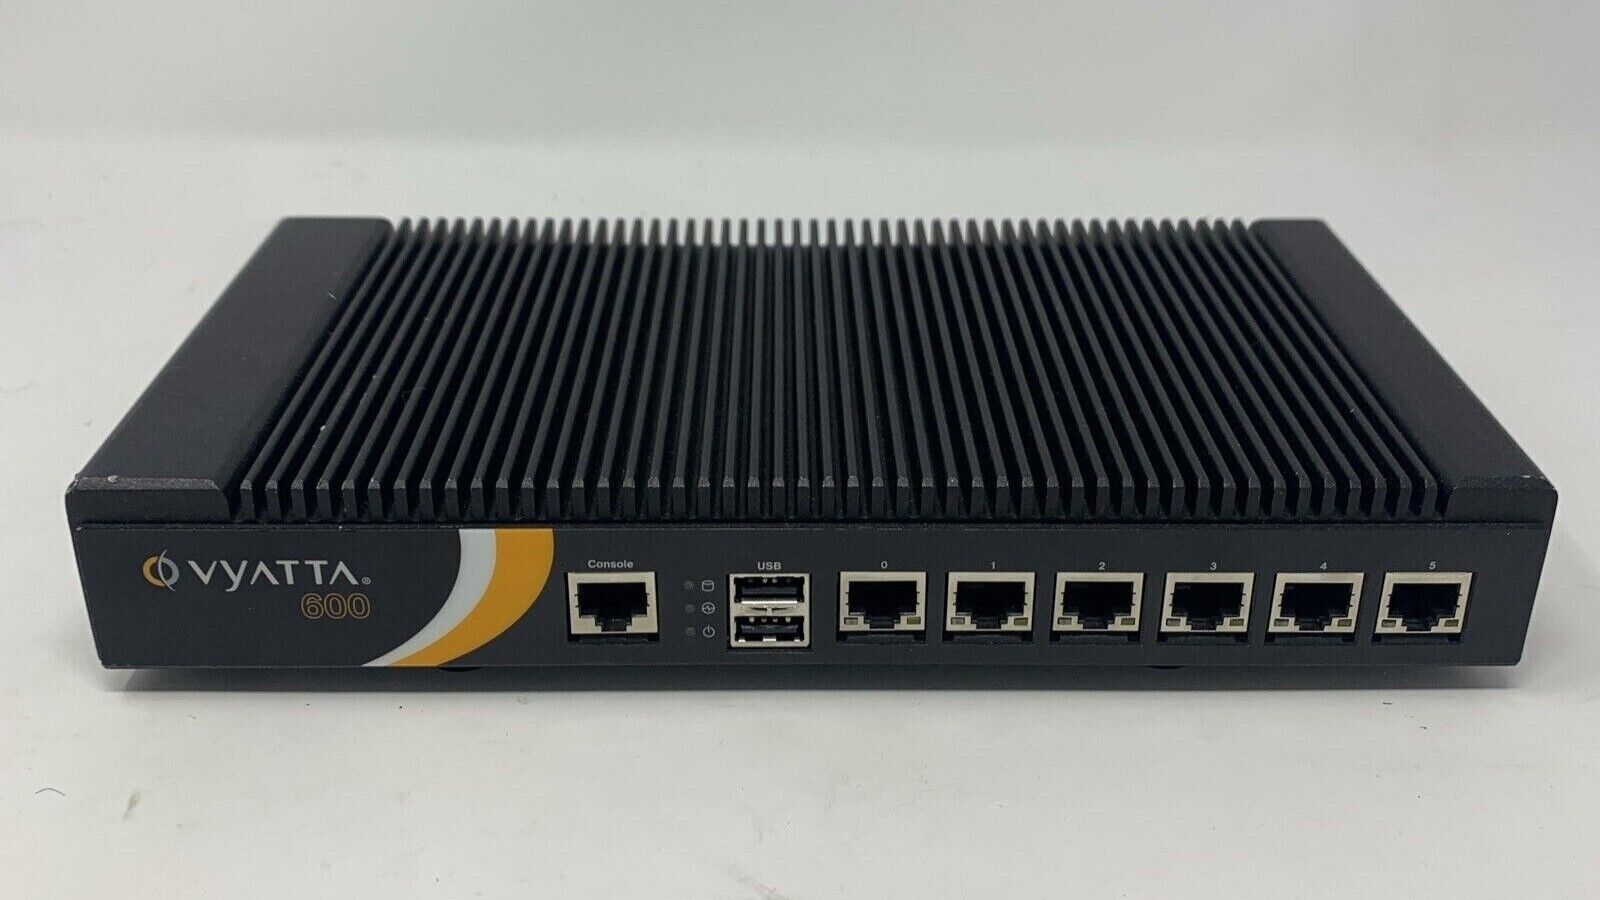 OPNsense six-port Gigabit router/firewall on Lanner FW-7535 hardware